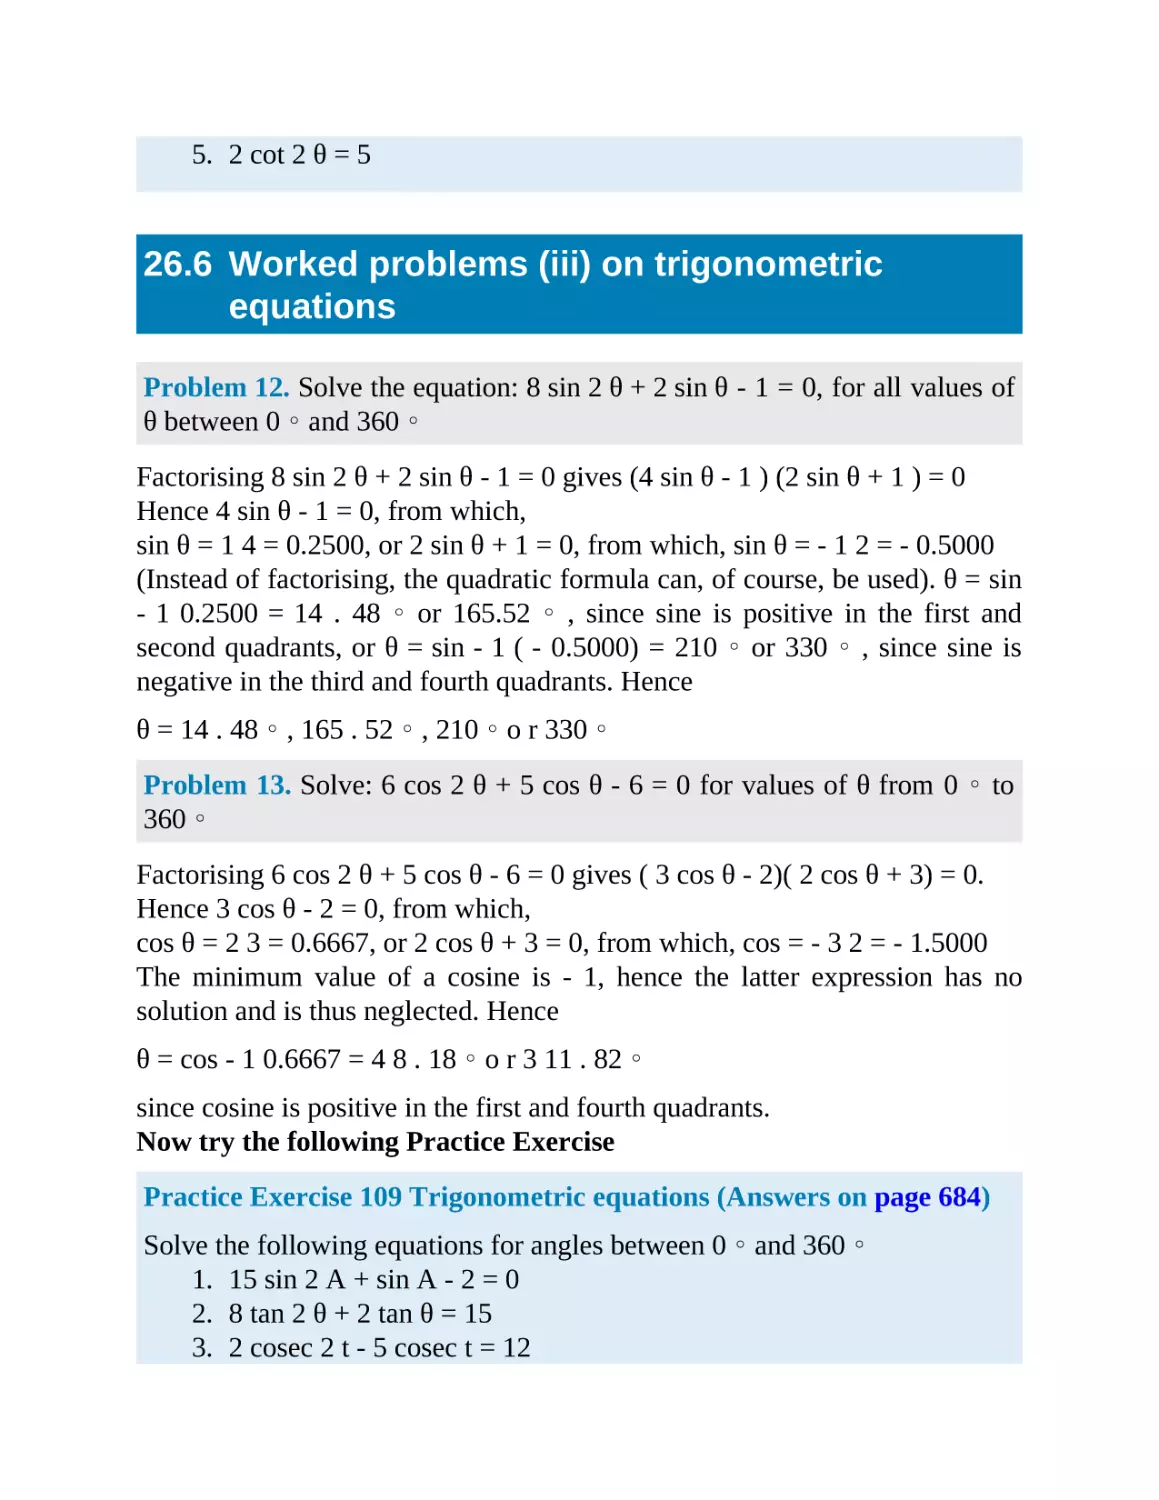 26.6 Worked problems (iii) on trigonometric equations